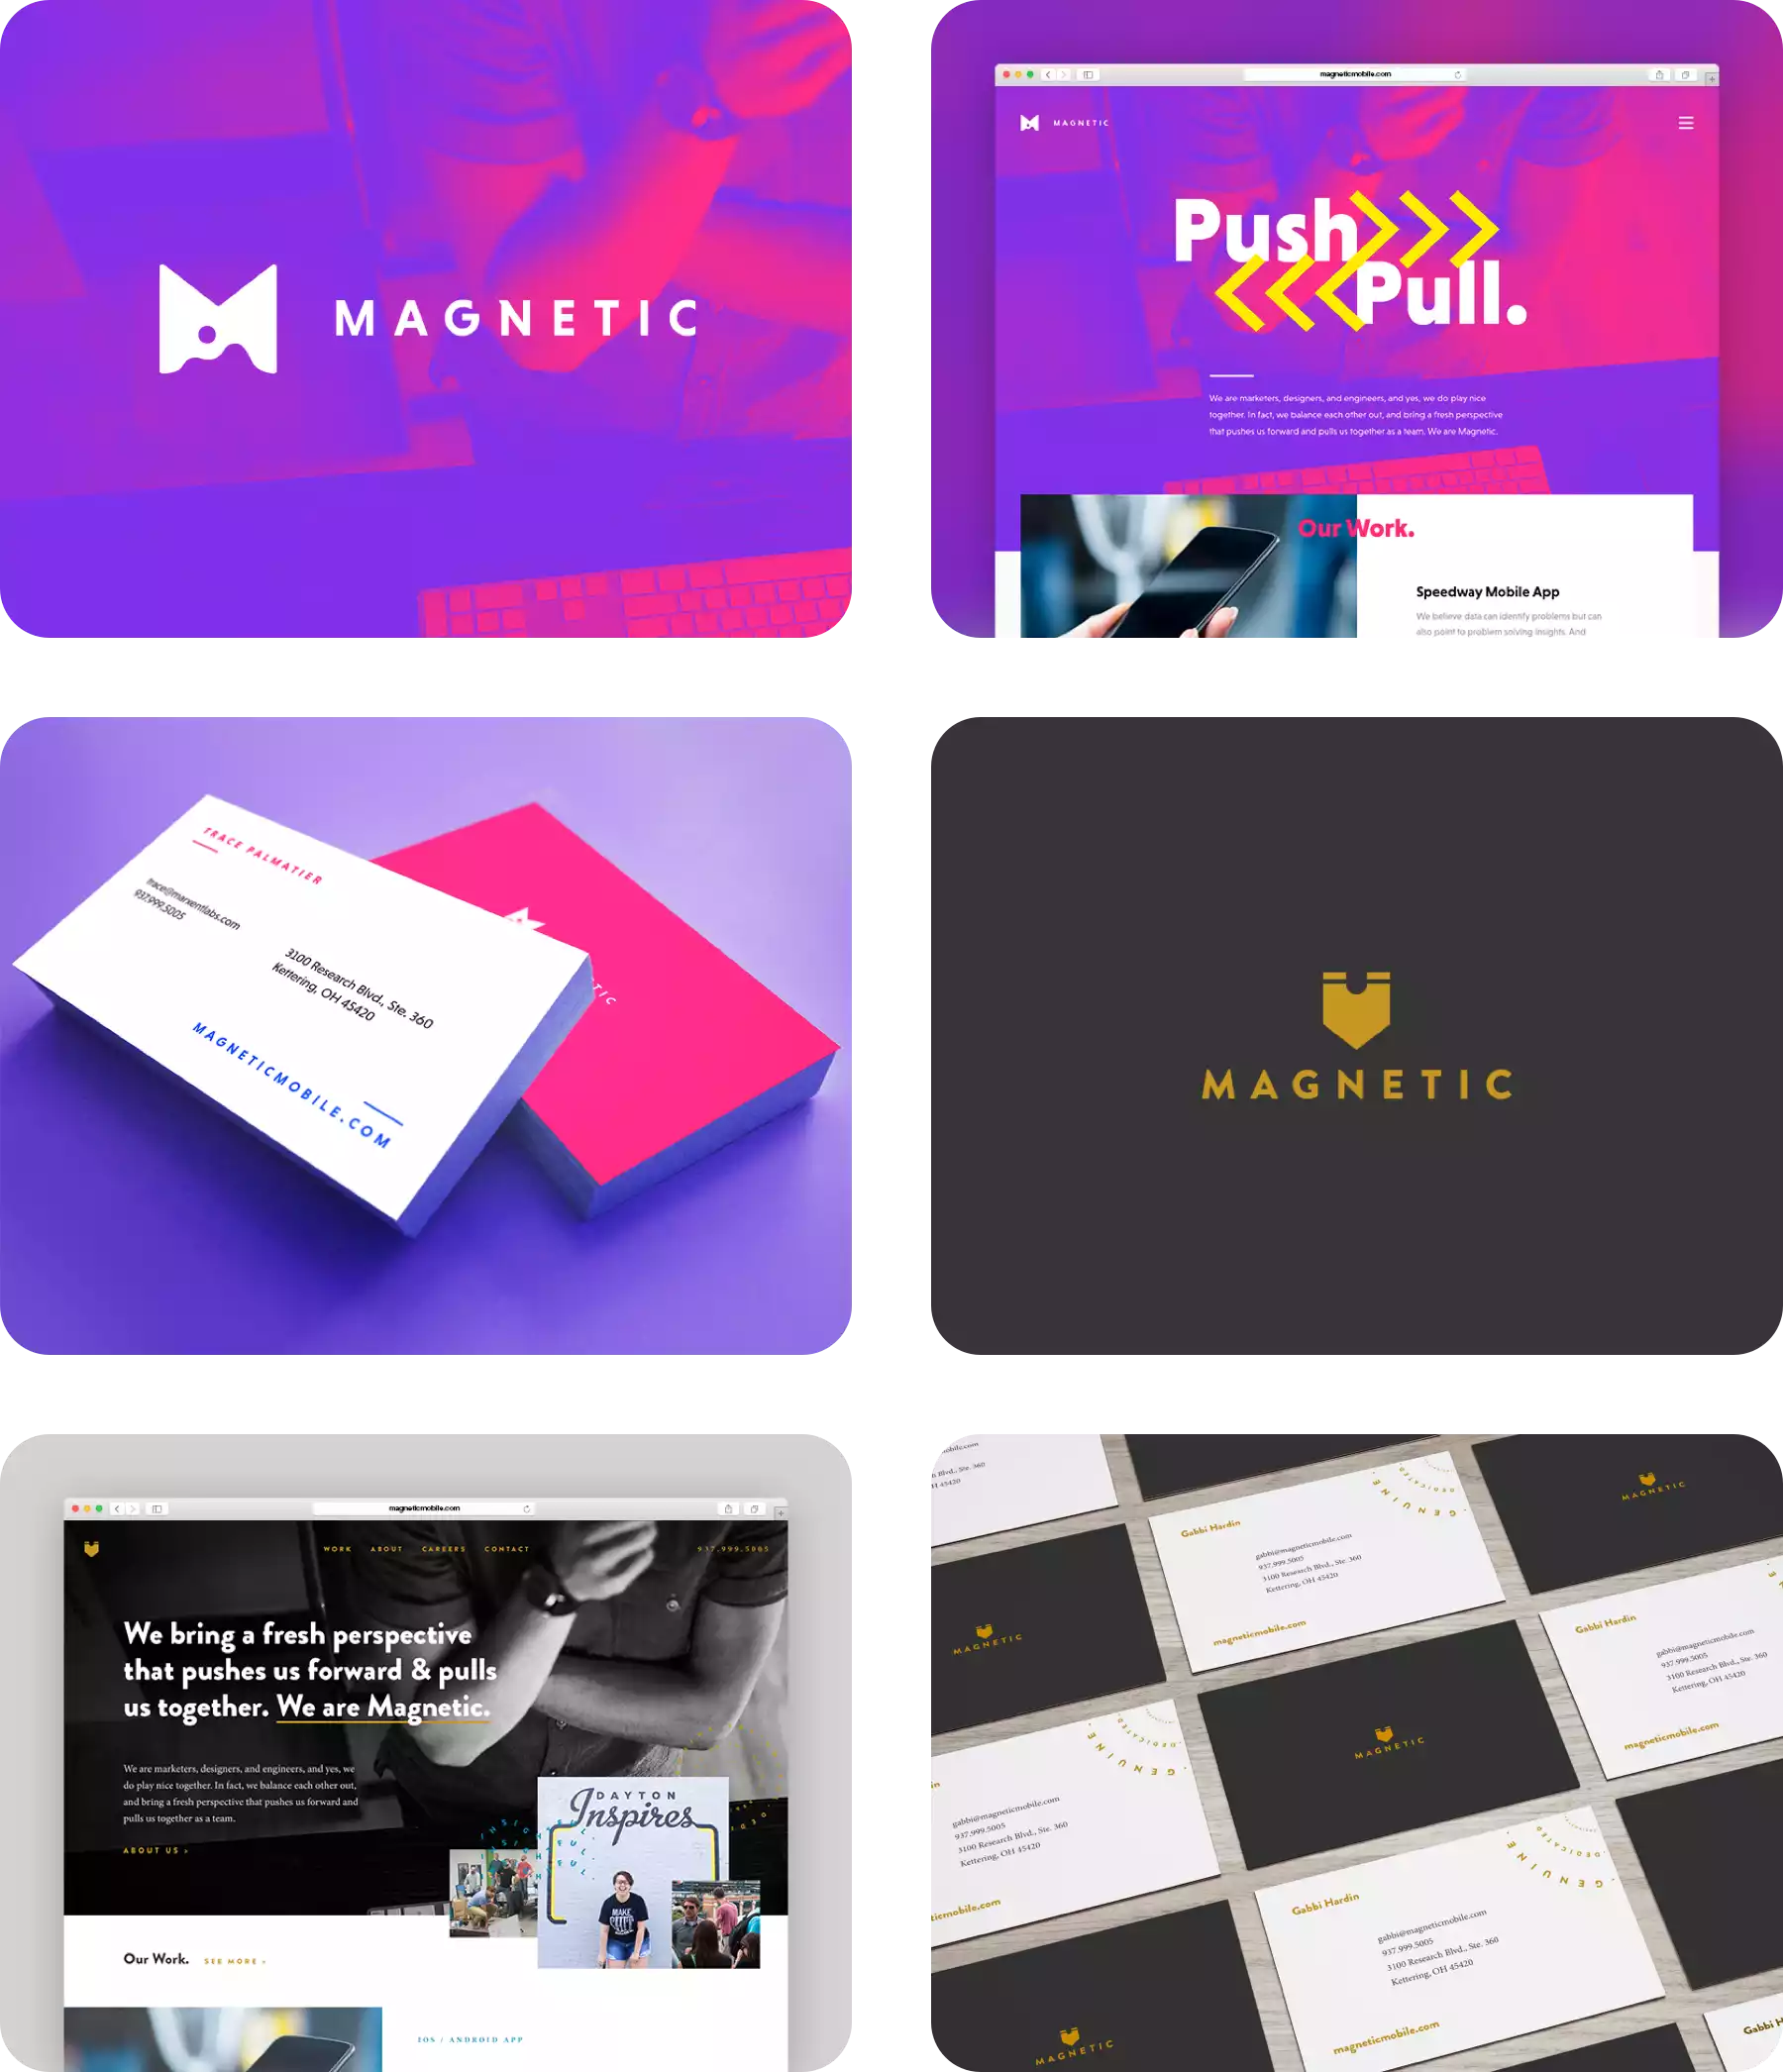 Magnetic Mobile alternate branding design concepts